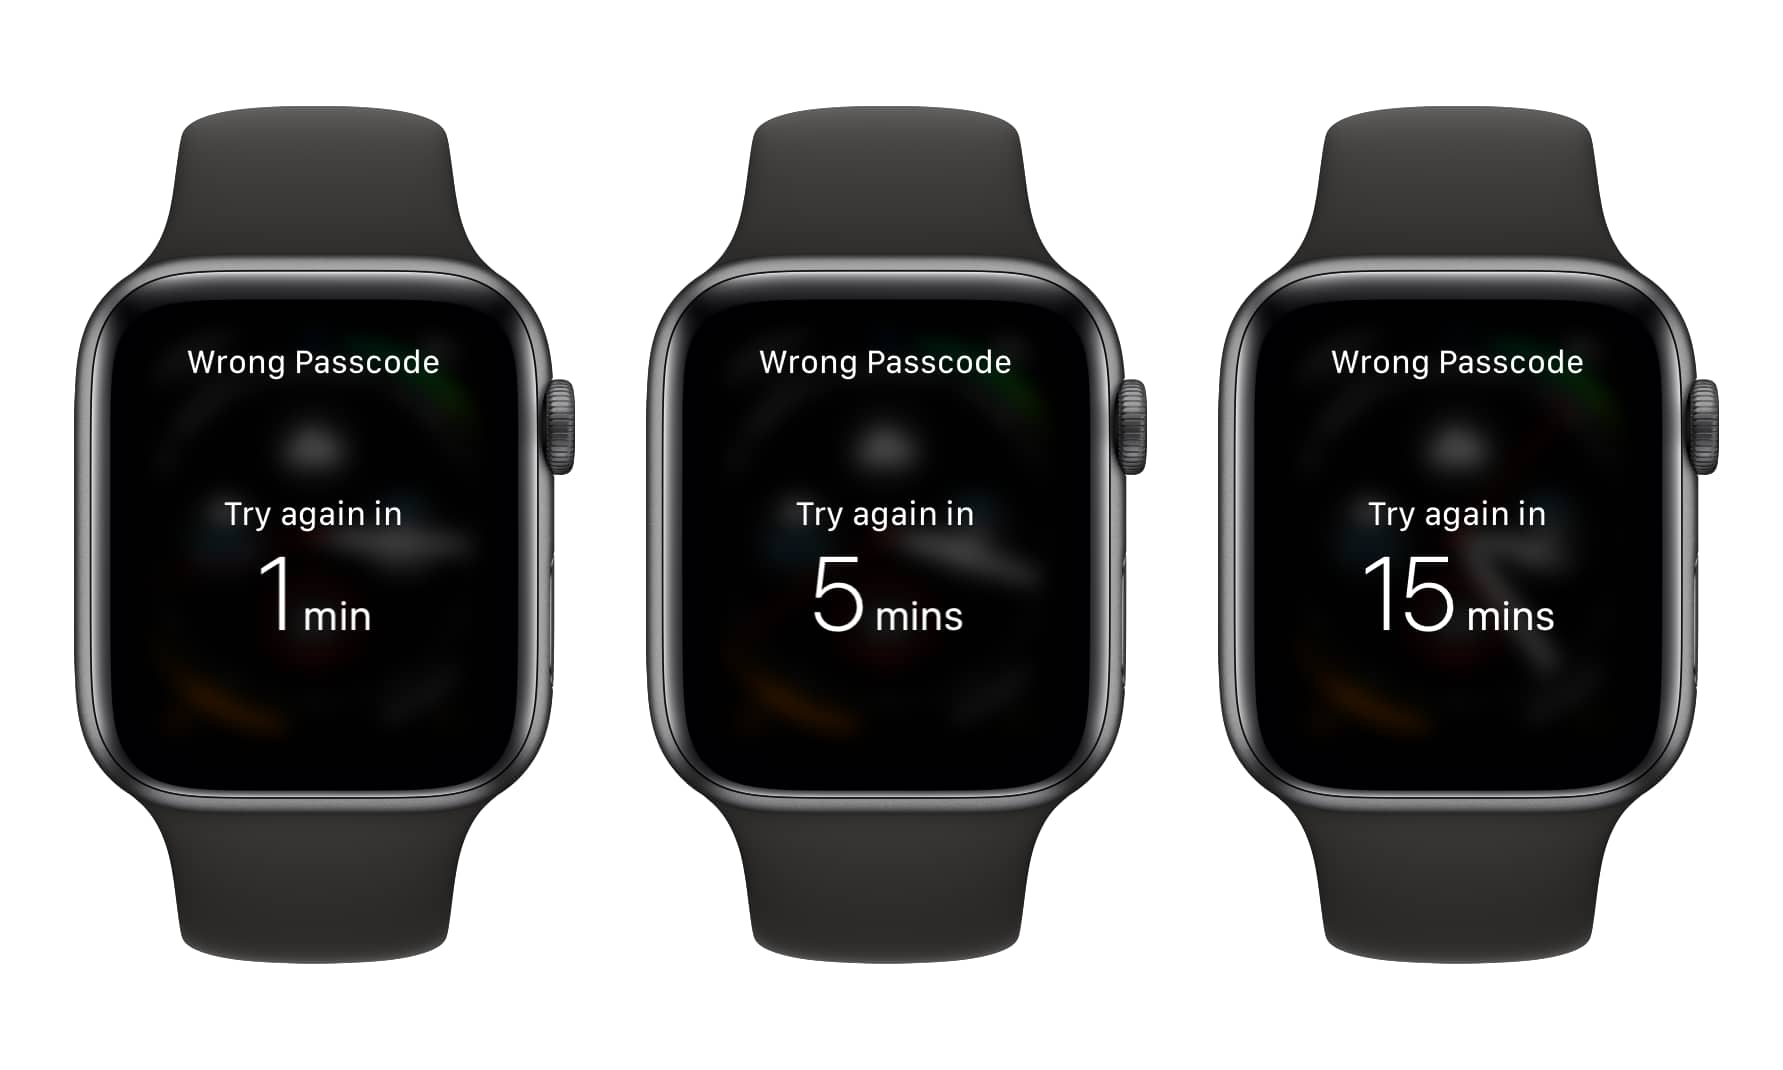 Apple Watch wrong passcode attempt delays